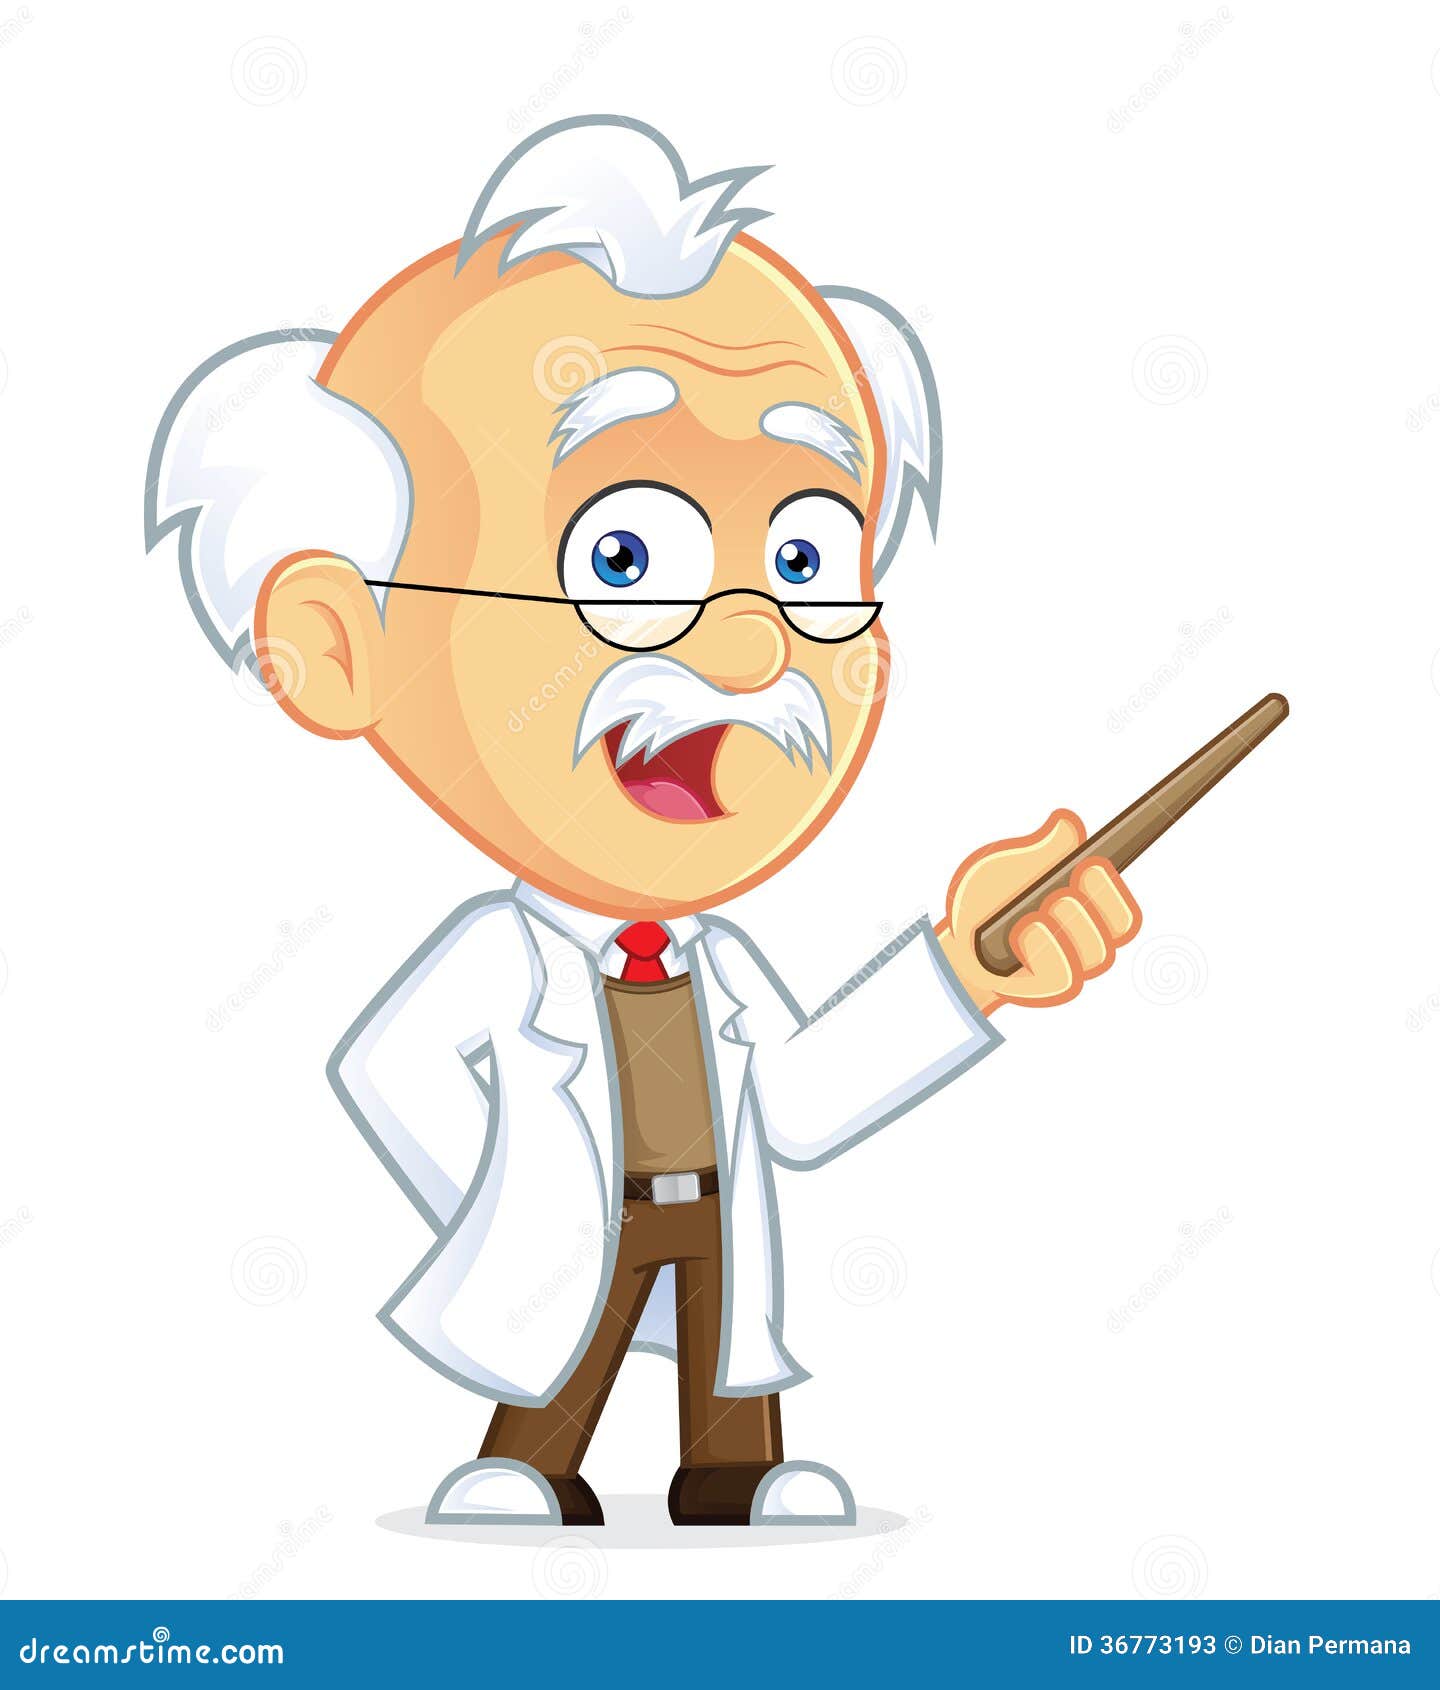 professor holding a pointer stick